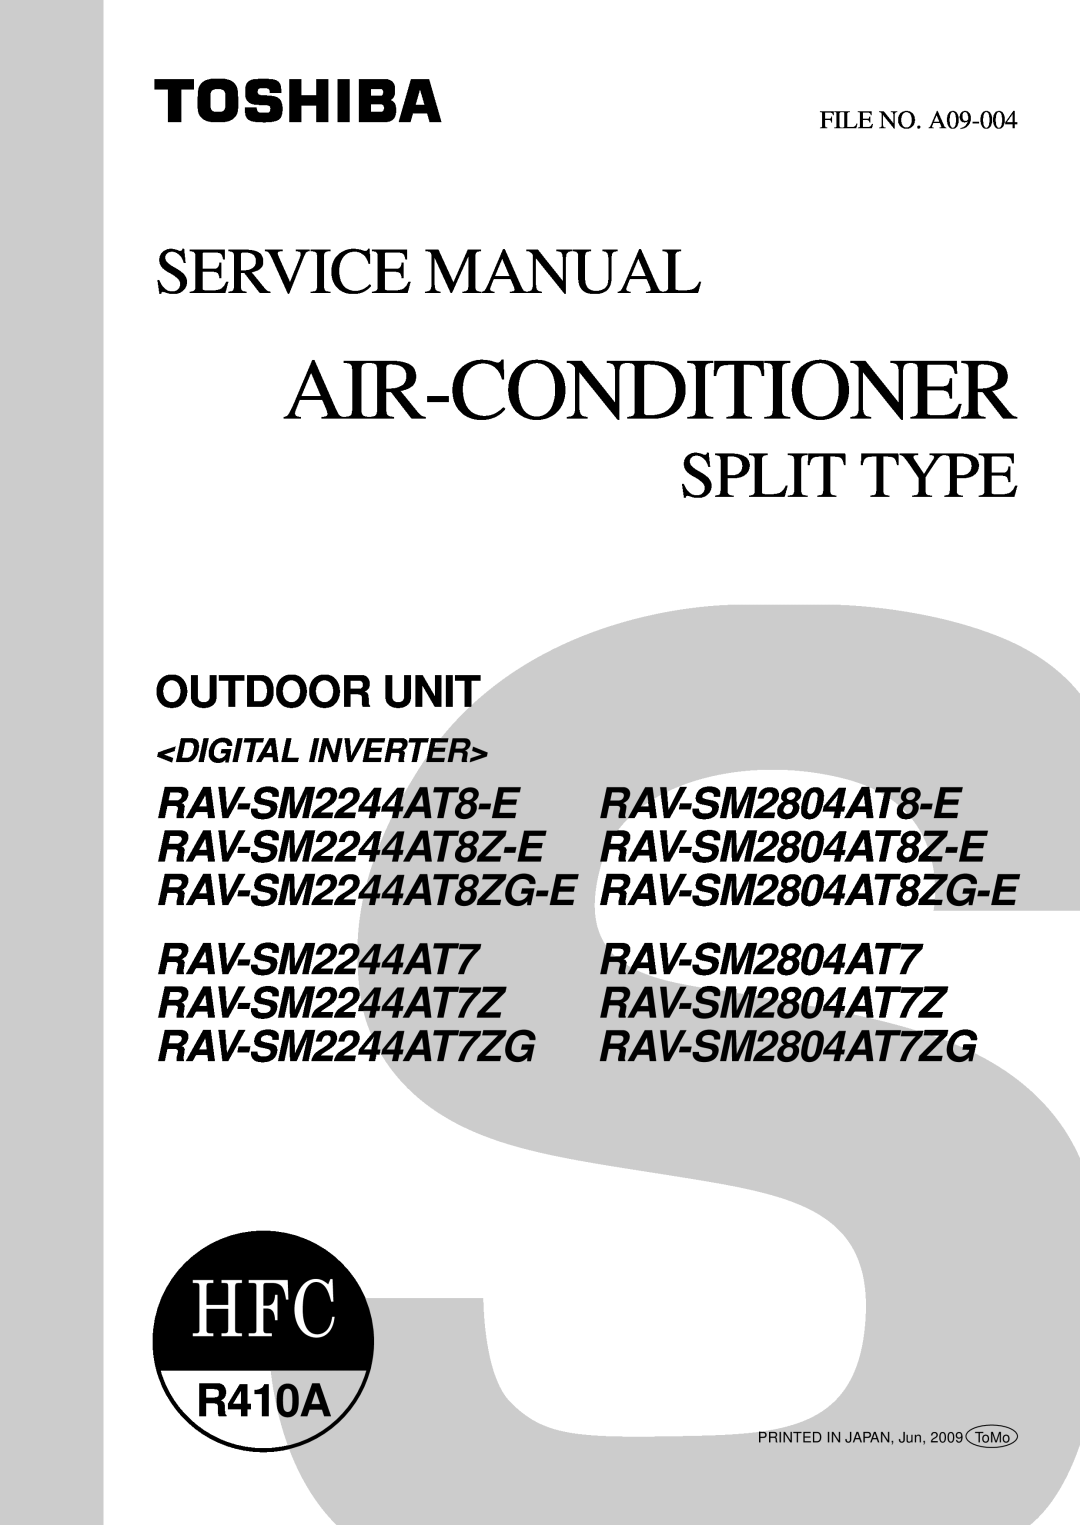 Toshiba RAV-SM2244AT8ZG-E service manual Outdoor Unit, Digital Inverter, Air-Conditioner, Service Manual, Split Type 